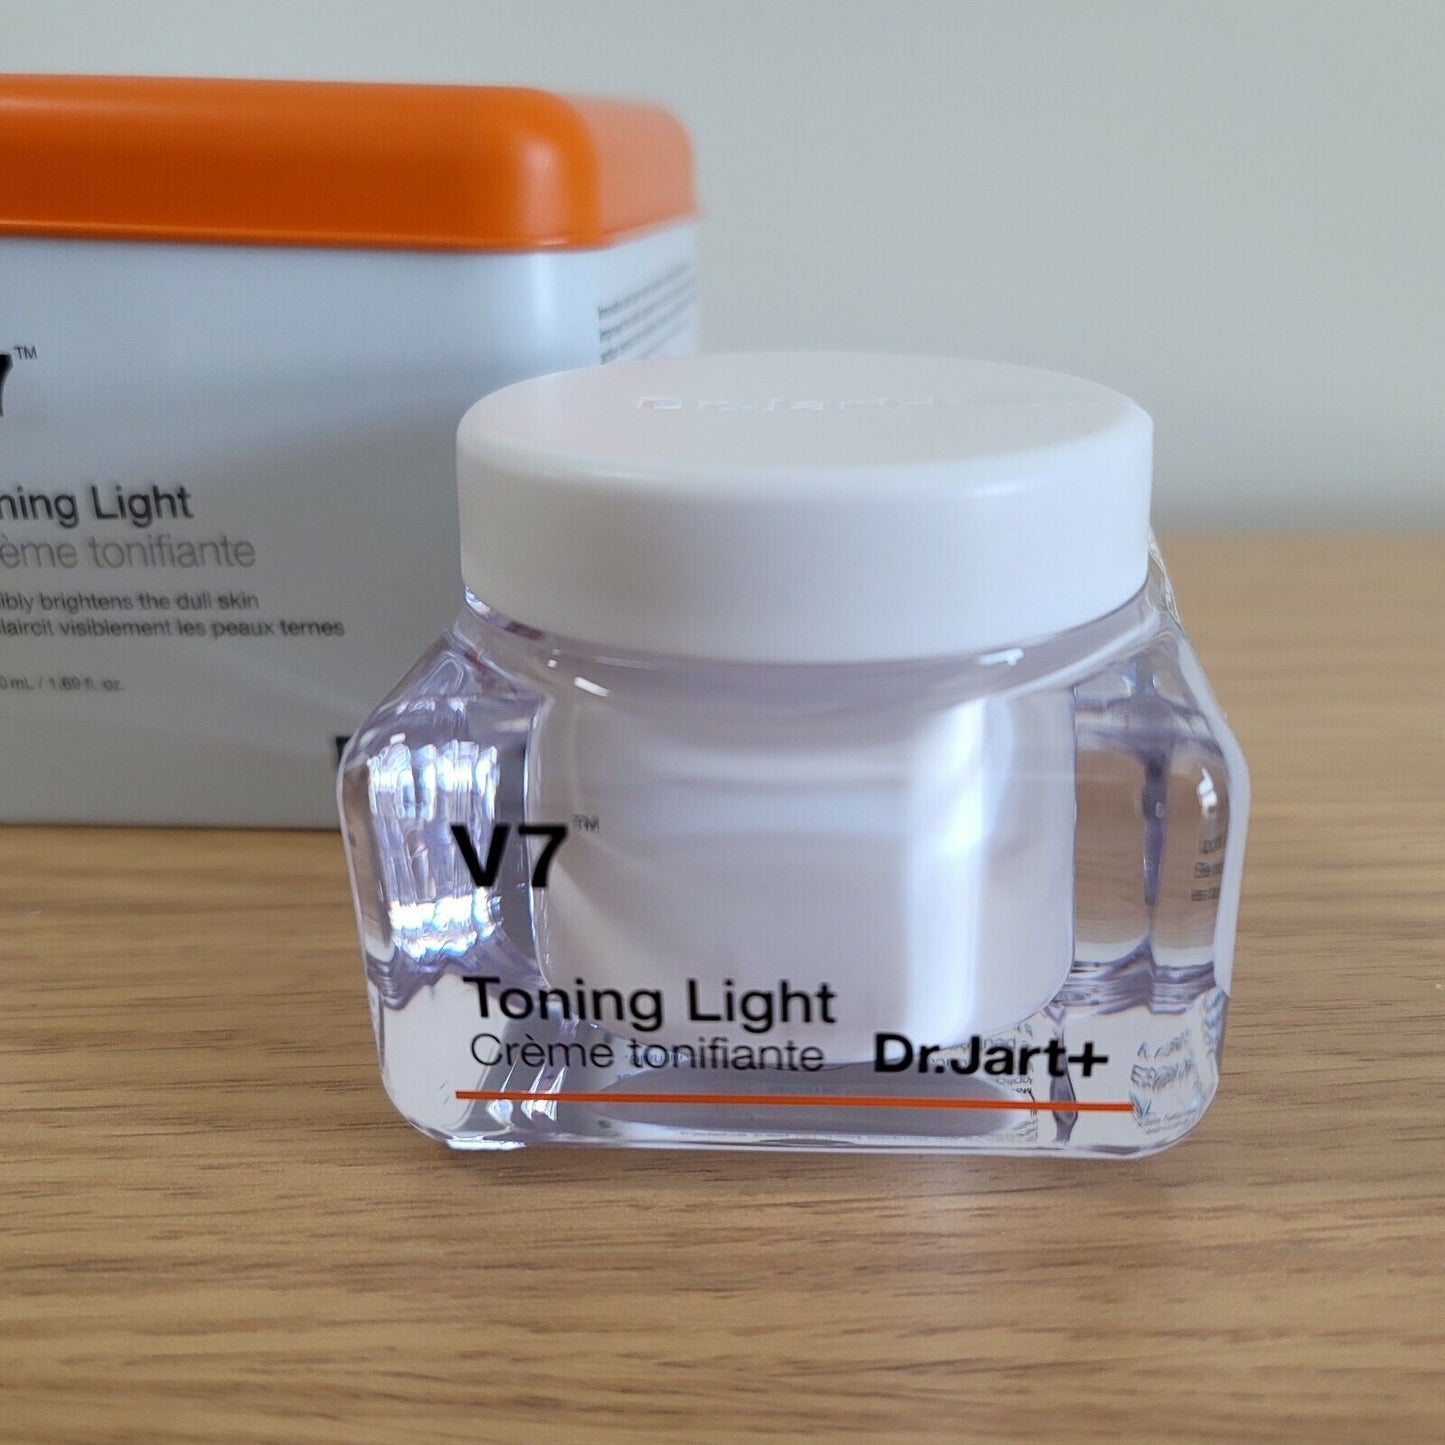 Dr.jart V7 Toning Light Brightening Cream 50ml+Banila Co. Cleansing Balm 100ml